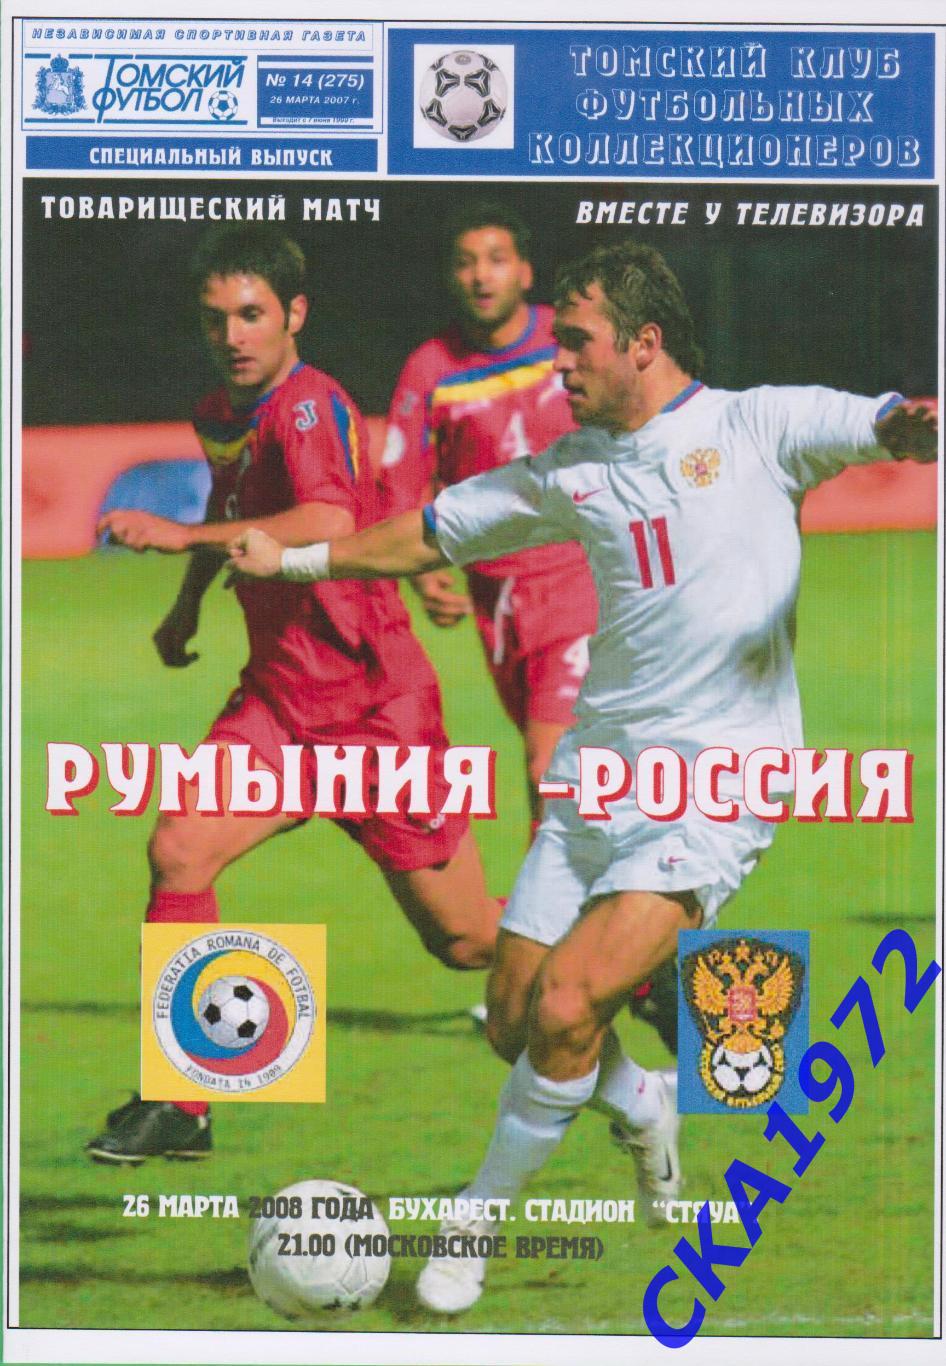 программа Румыния - Россия 2008